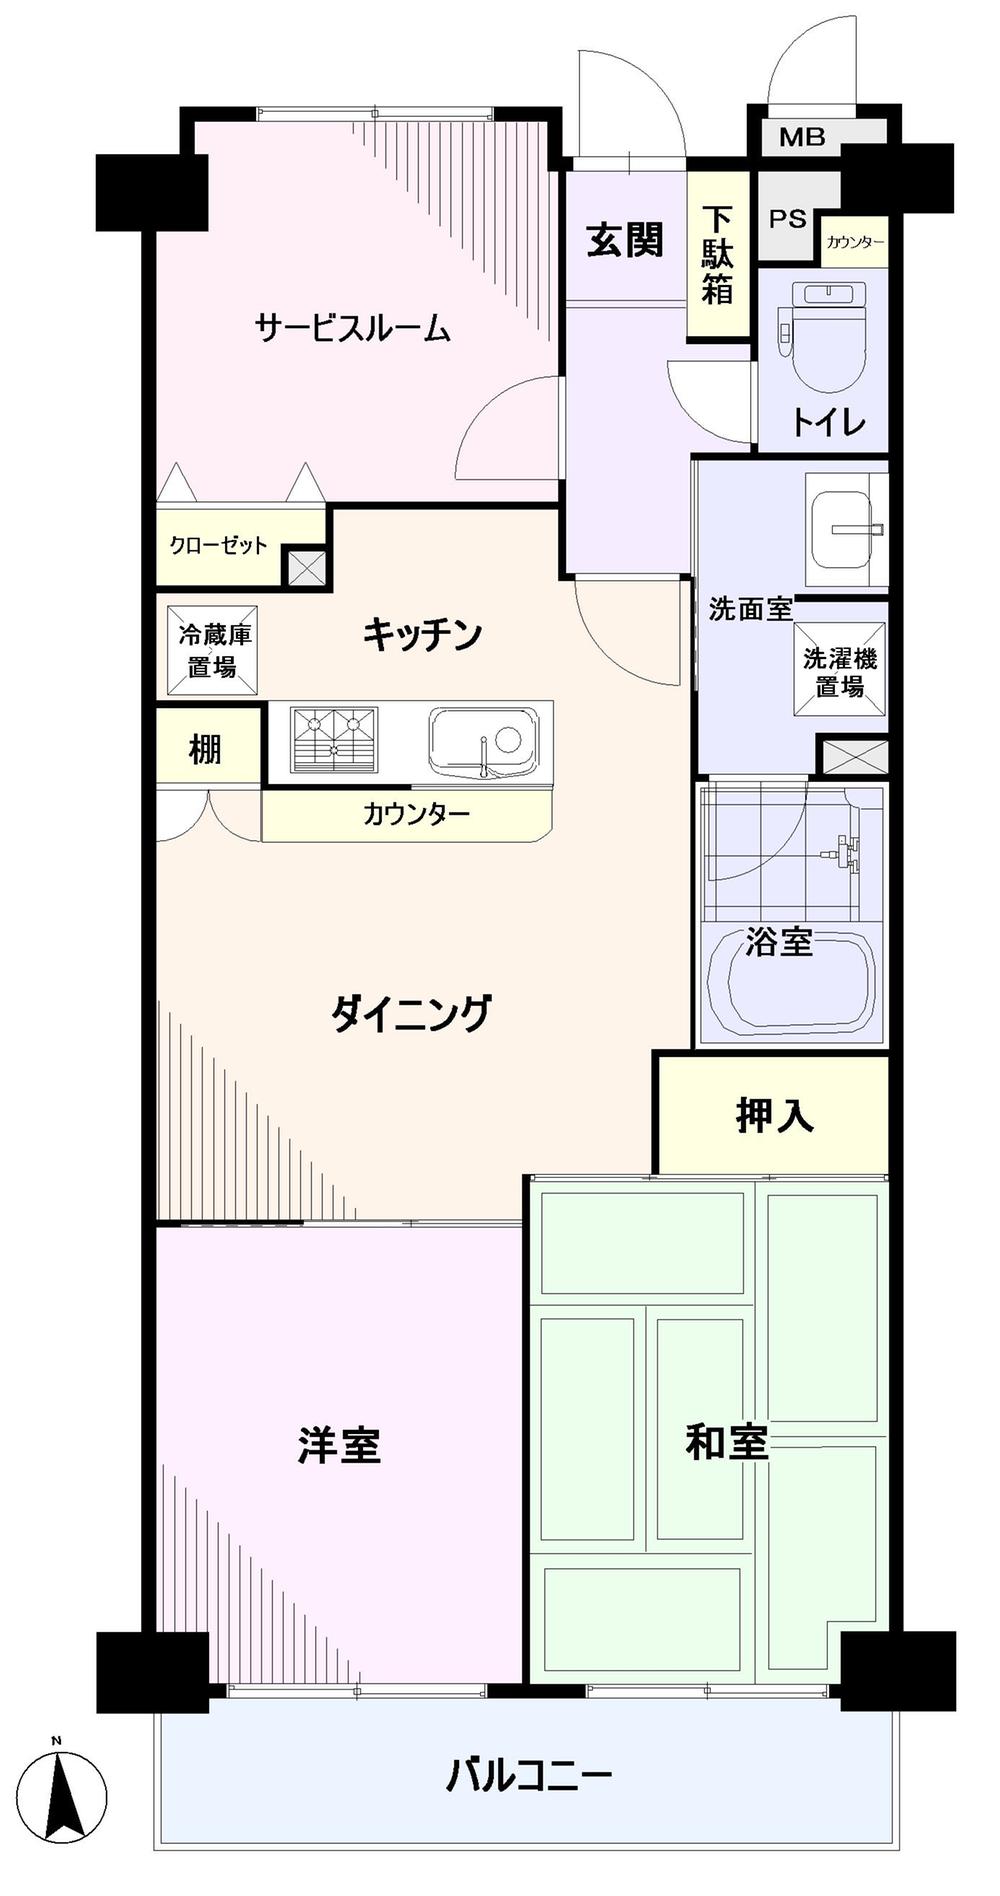 Floor plan. 2DK + S (storeroom), Price 27,800,000 yen, Occupied area 58.48 sq m , Balcony area 5.83 sq m